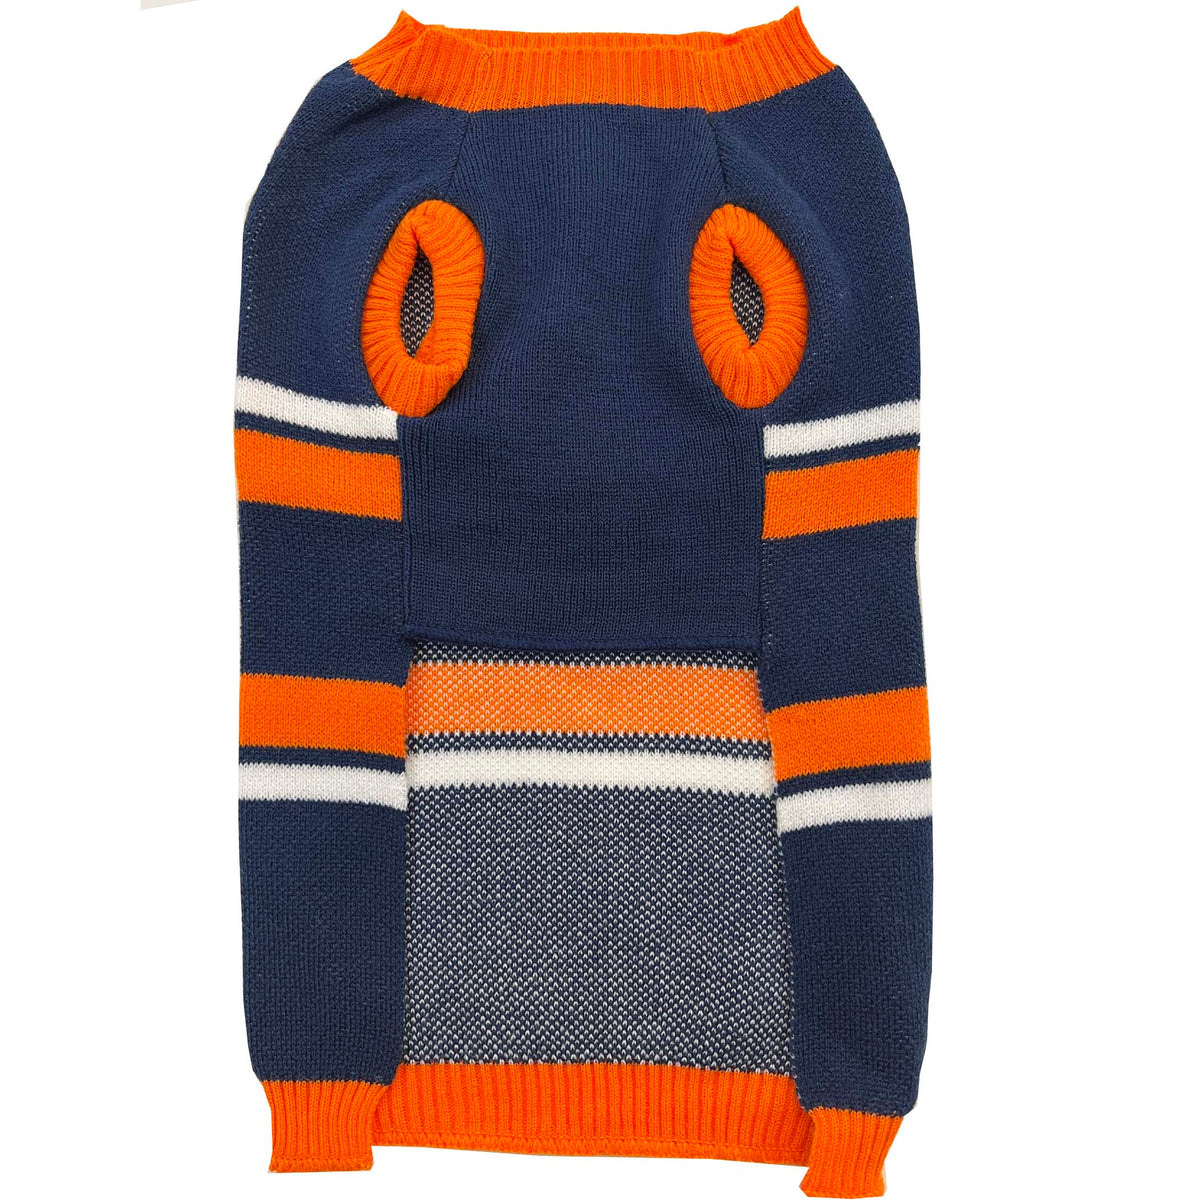 Denver Broncos Colorblock Pet Sweater